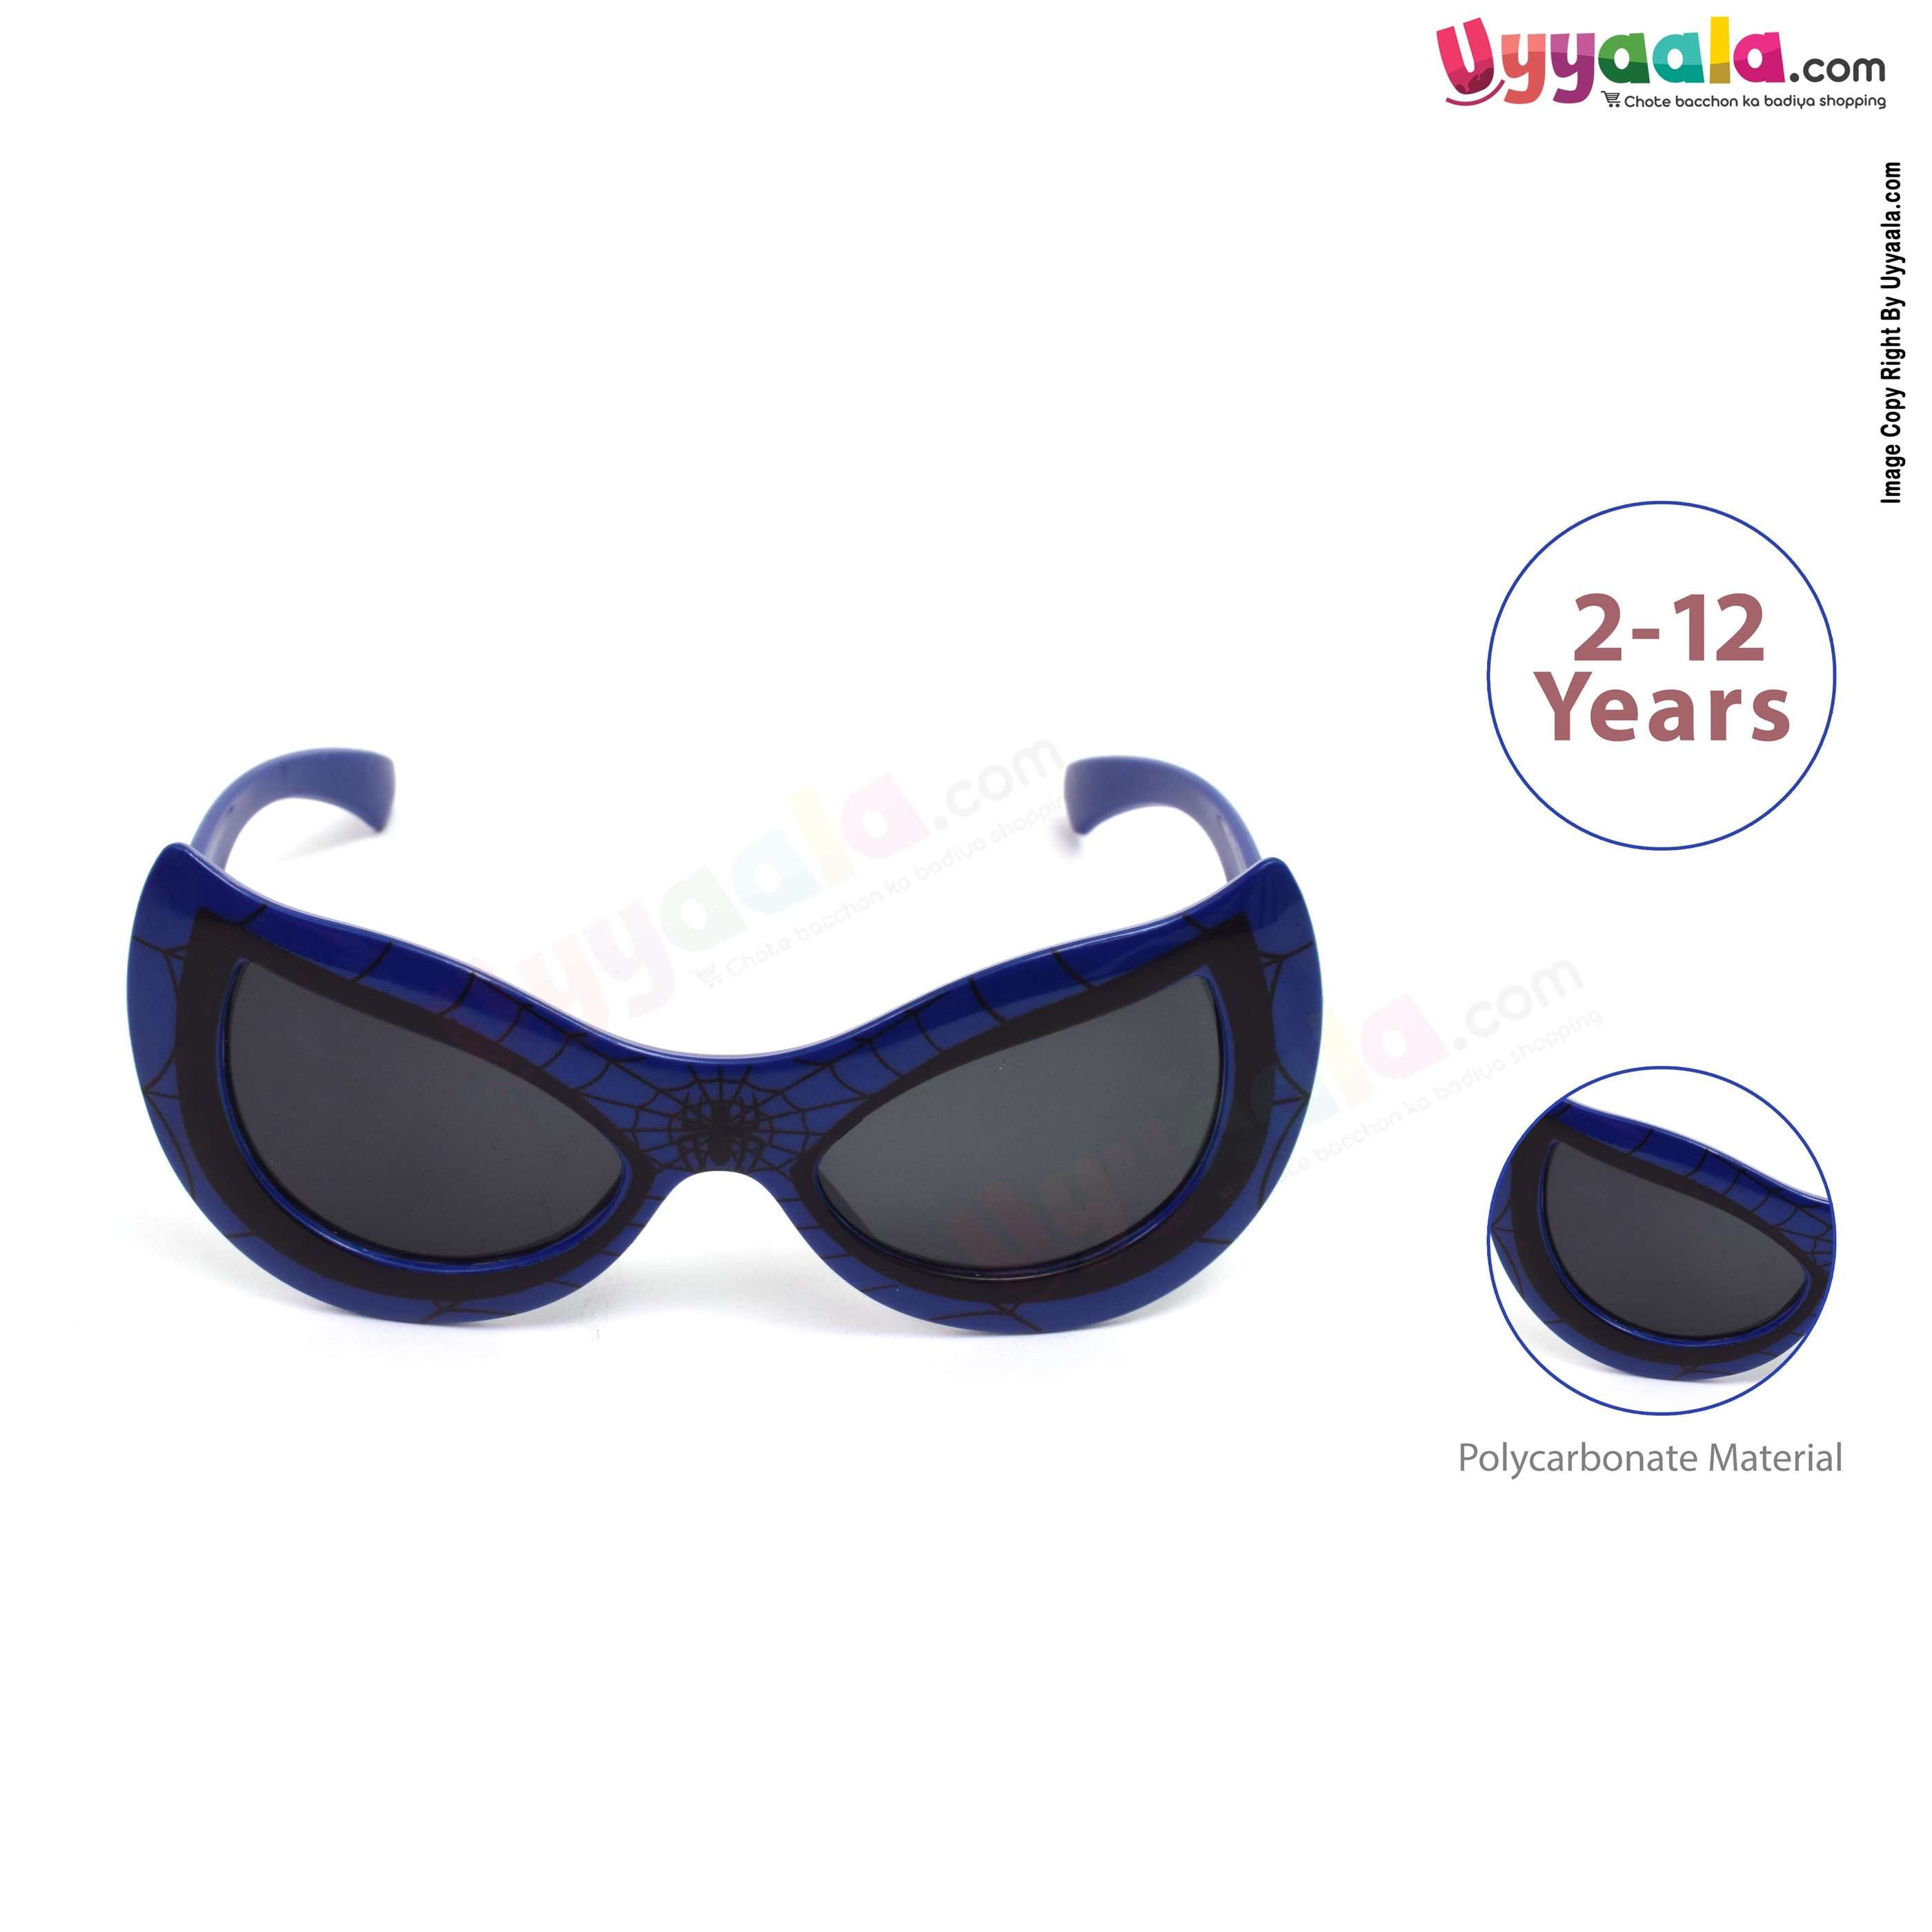 Stylish spider-man tinted cat-eye sunglasses for kids - dark blue with black web print, 1 - 10 years